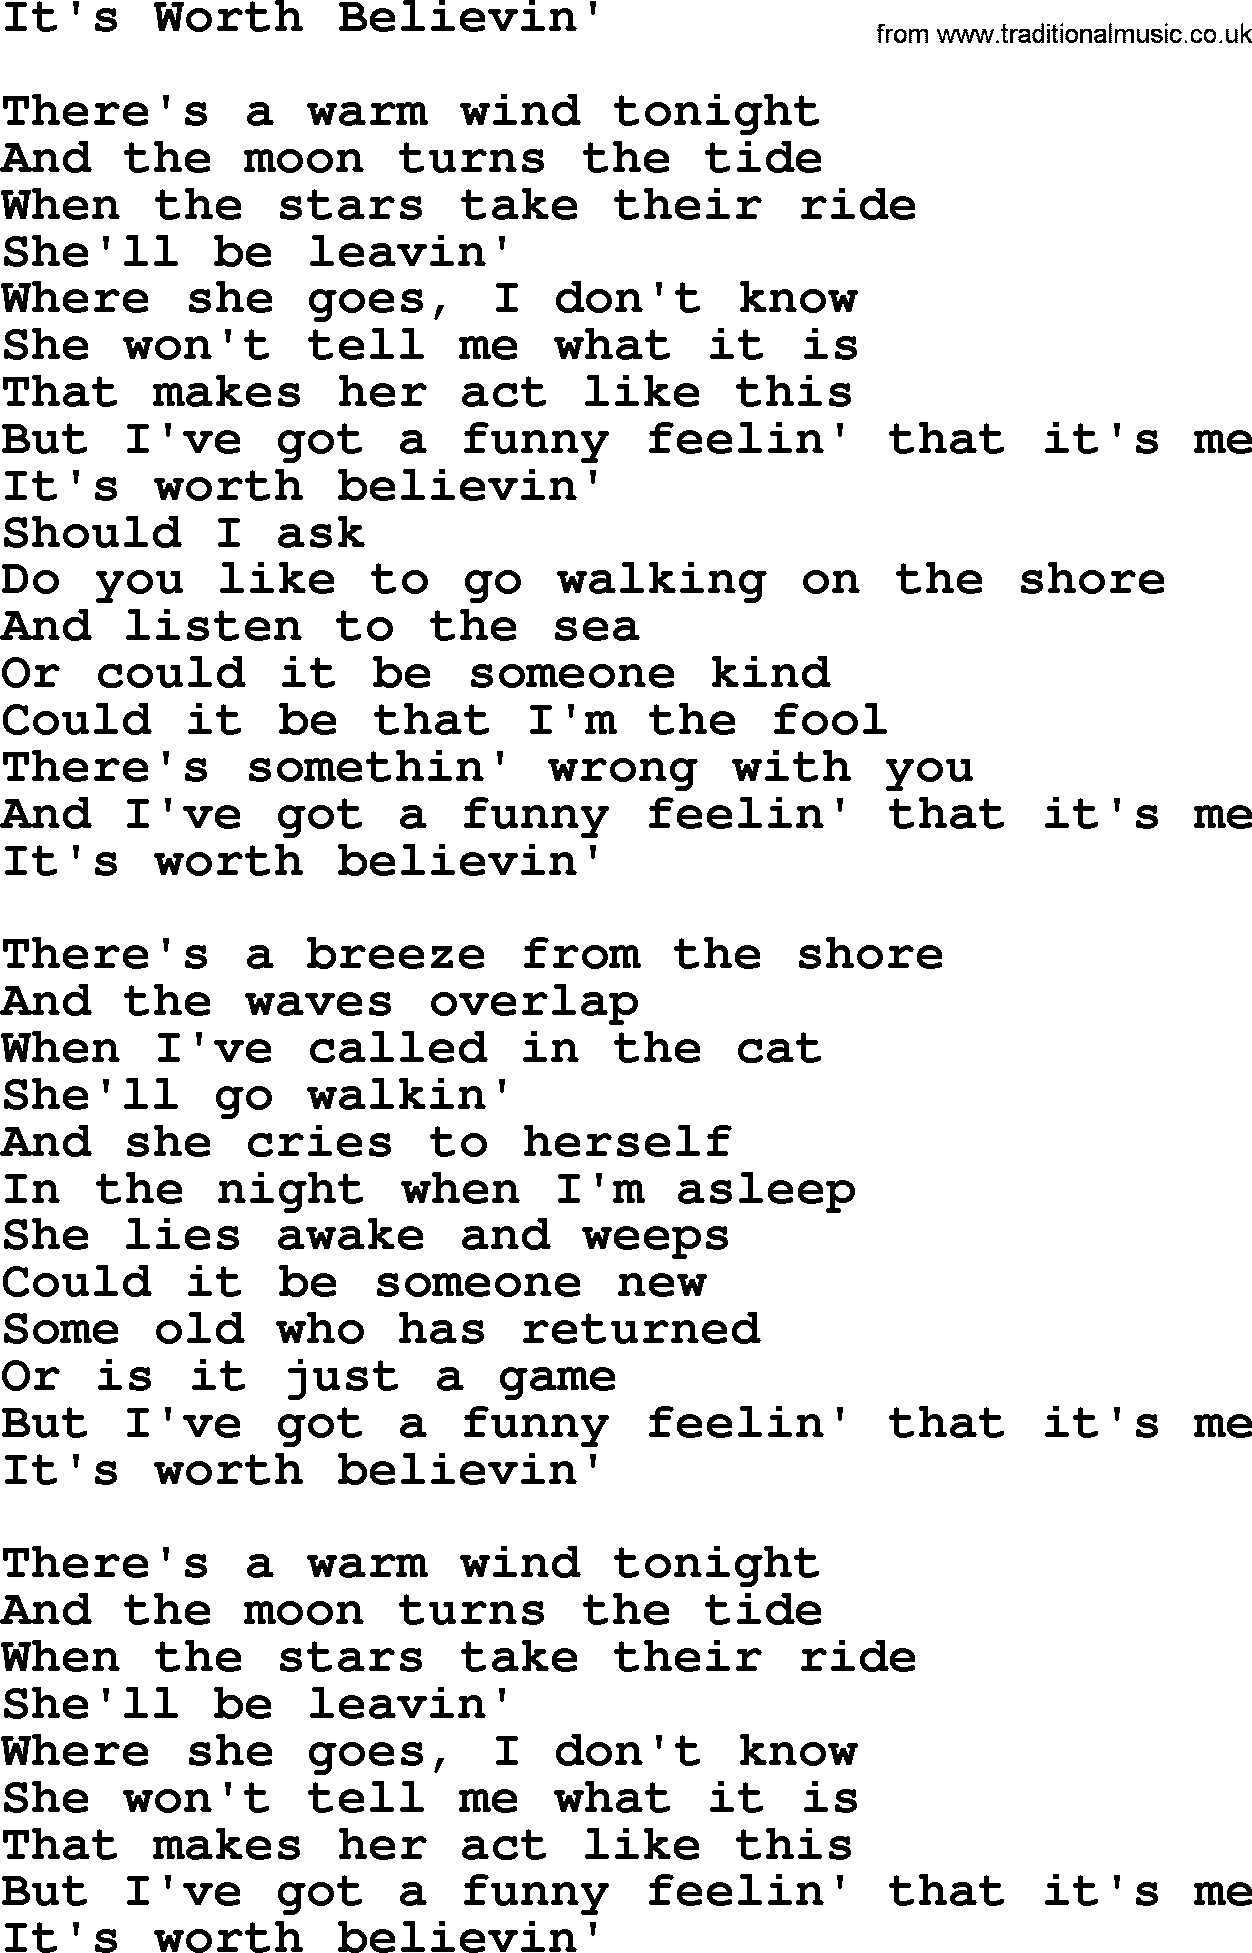 Gordon Lightfoot song It's Worth Believin', lyrics